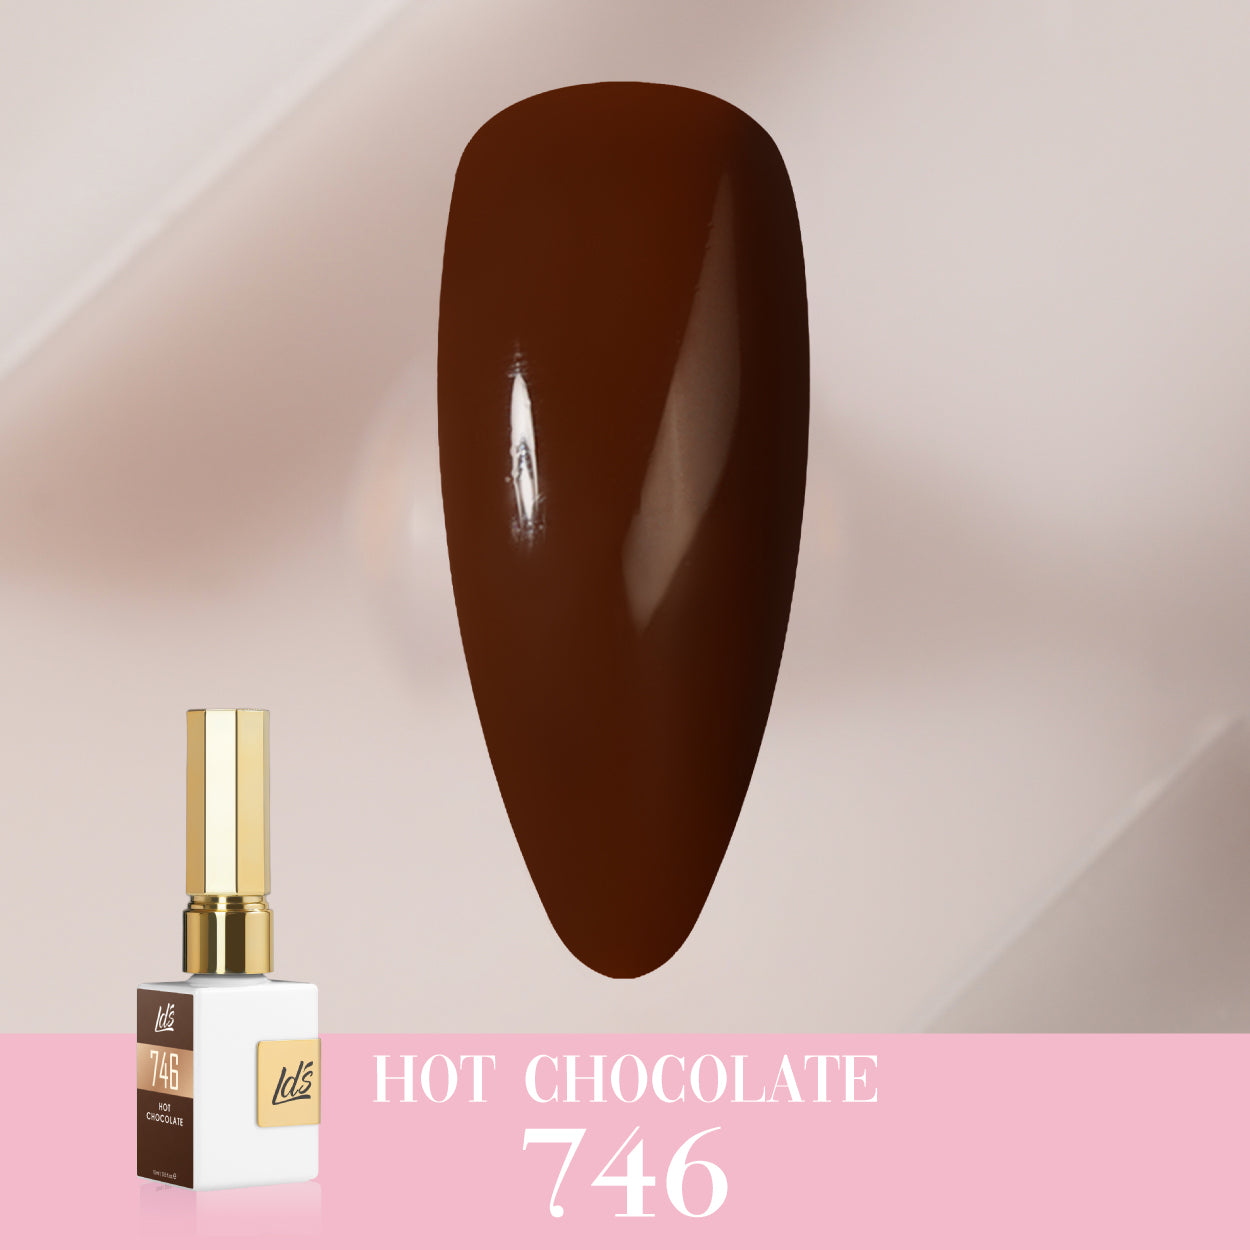 LDS Color Craze Collection - 746 Hot Chocolate - Gel Polish 0.5oz